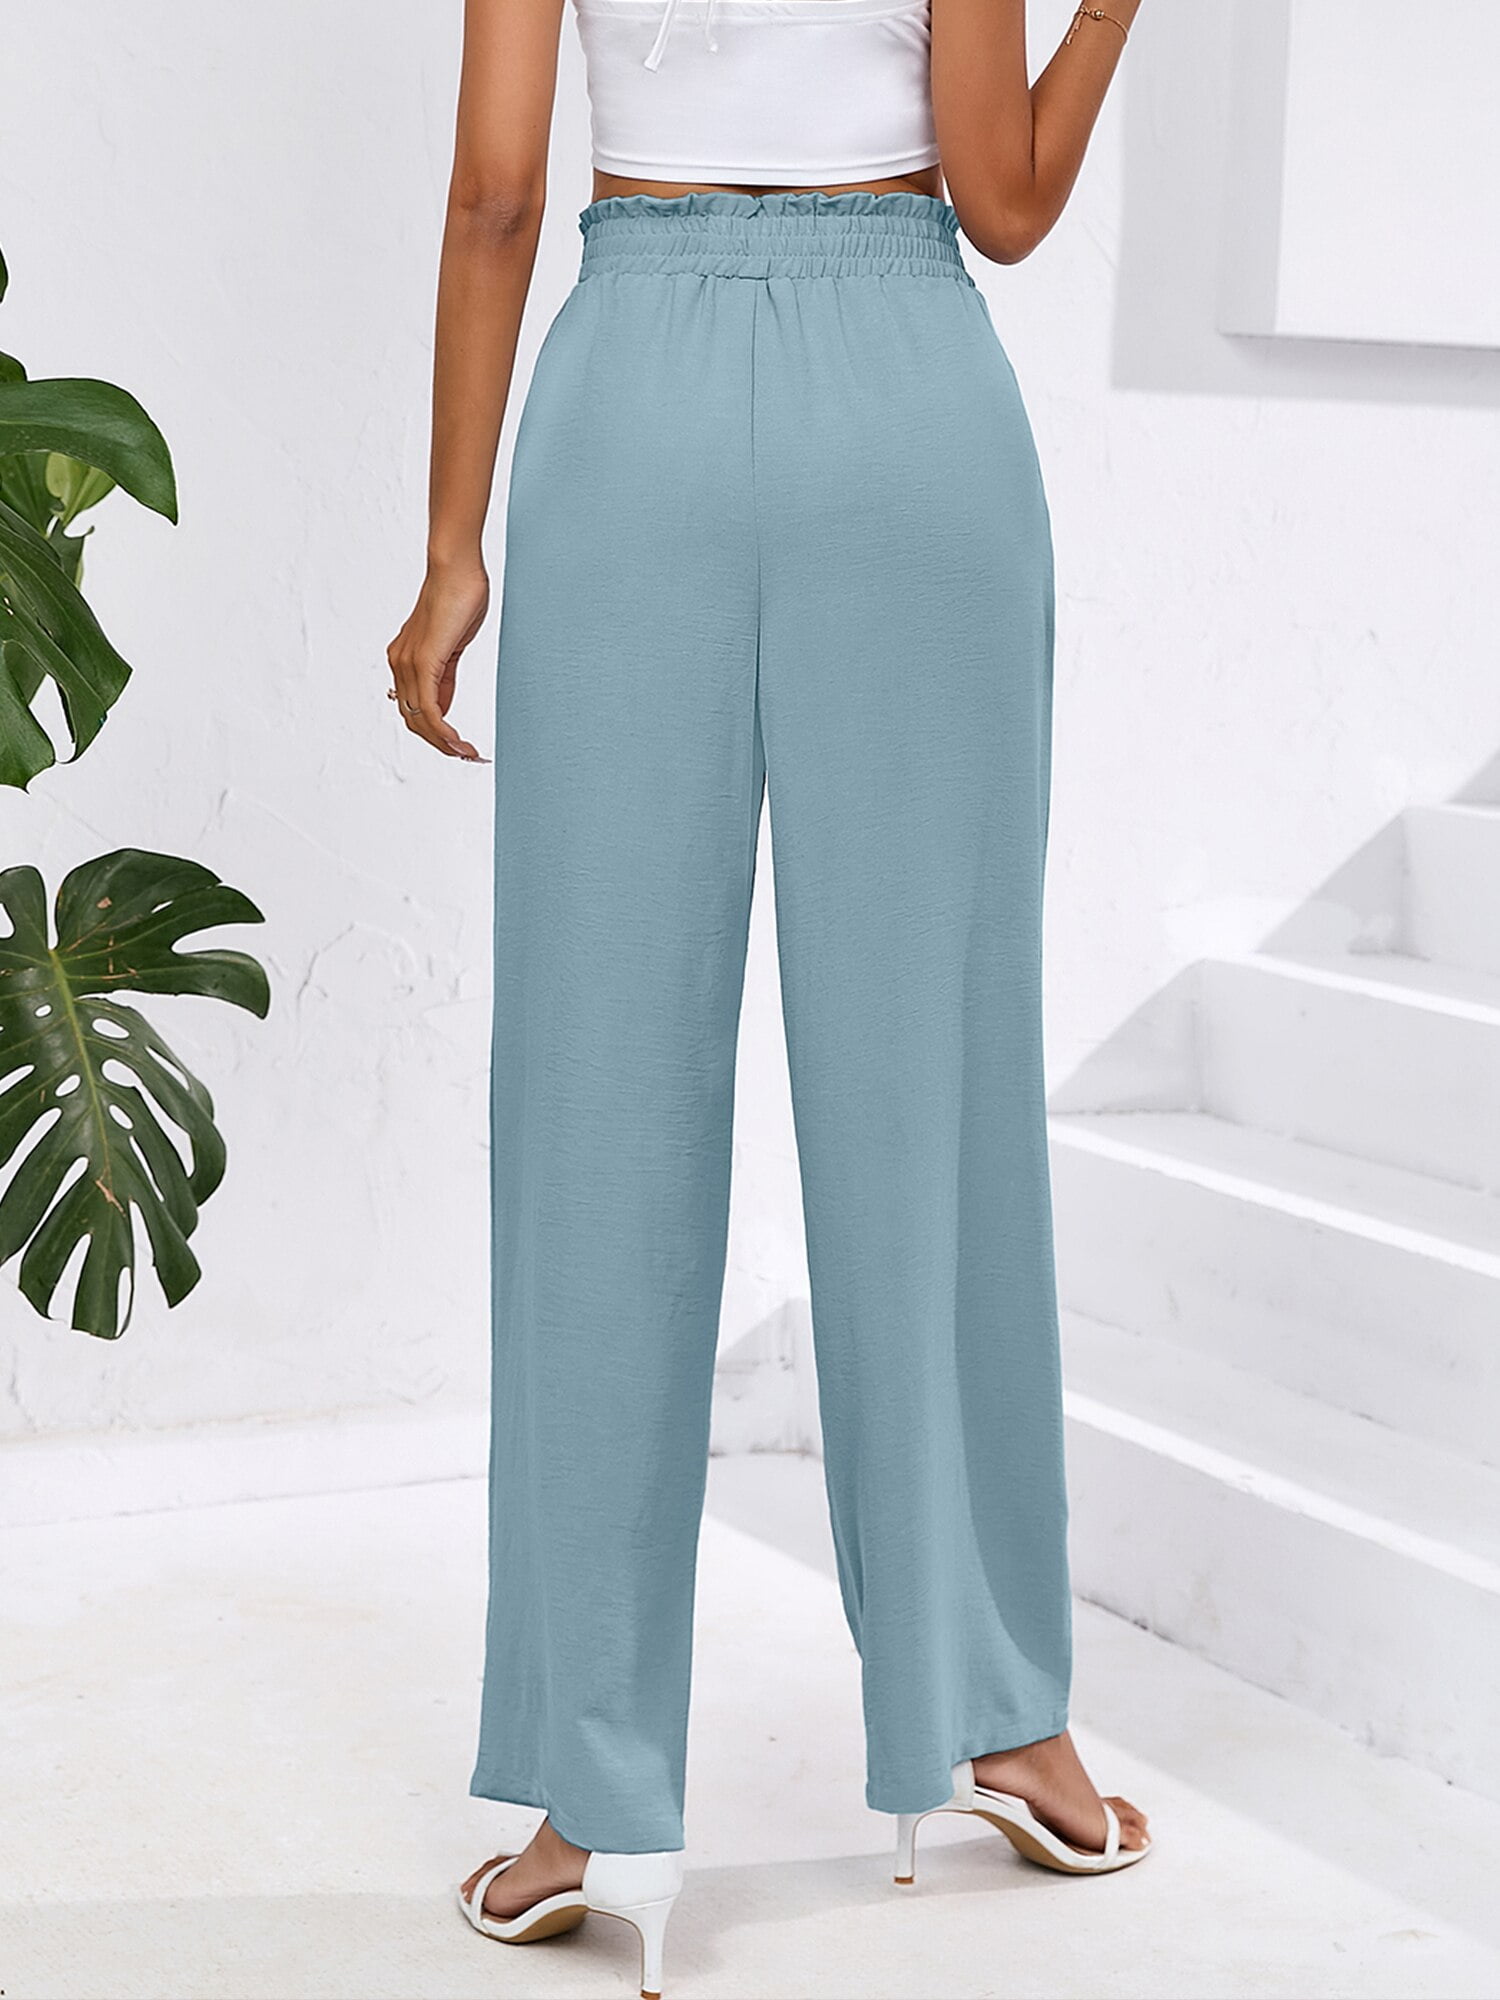 RYRJJ Women's Fashion Wide Leg Lounge Pants with Pockets Lightweight High  Waisted Adjustable Tie Knot Loose Business Work Trousers(Sky Blue,XL) -  Walmart.com